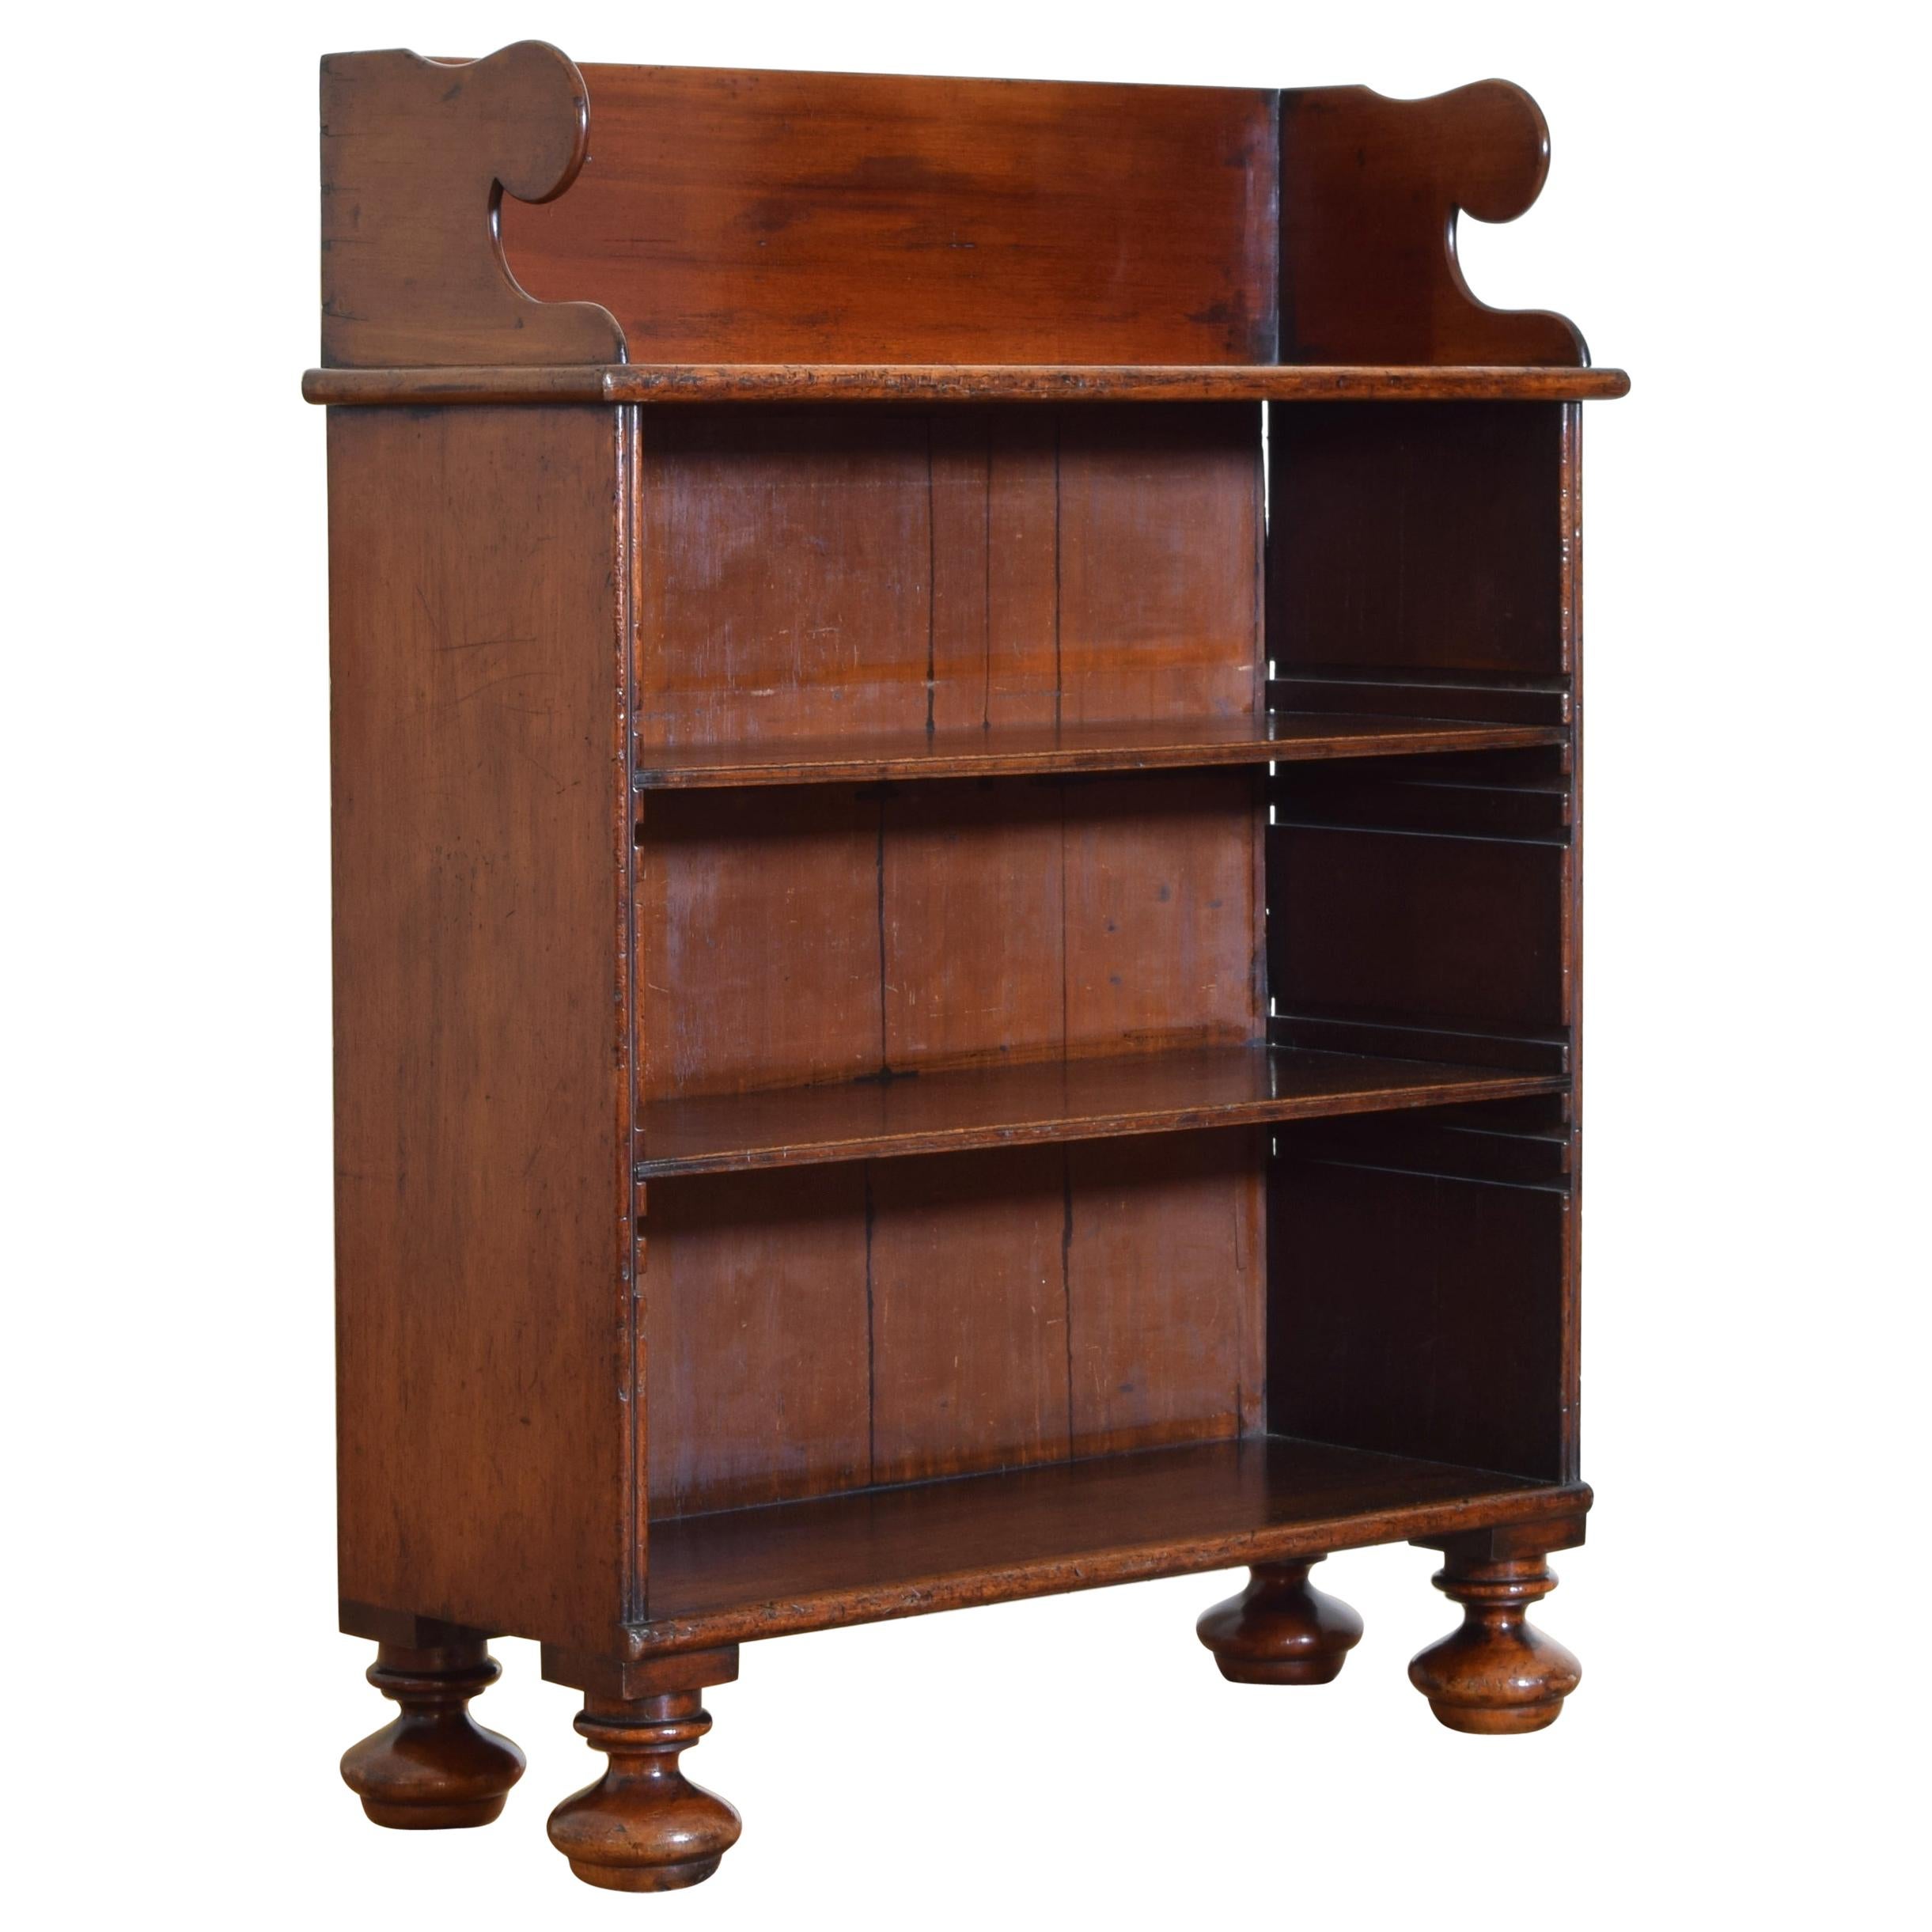 19th century William IV Rosewood 4 shelf Bookcase